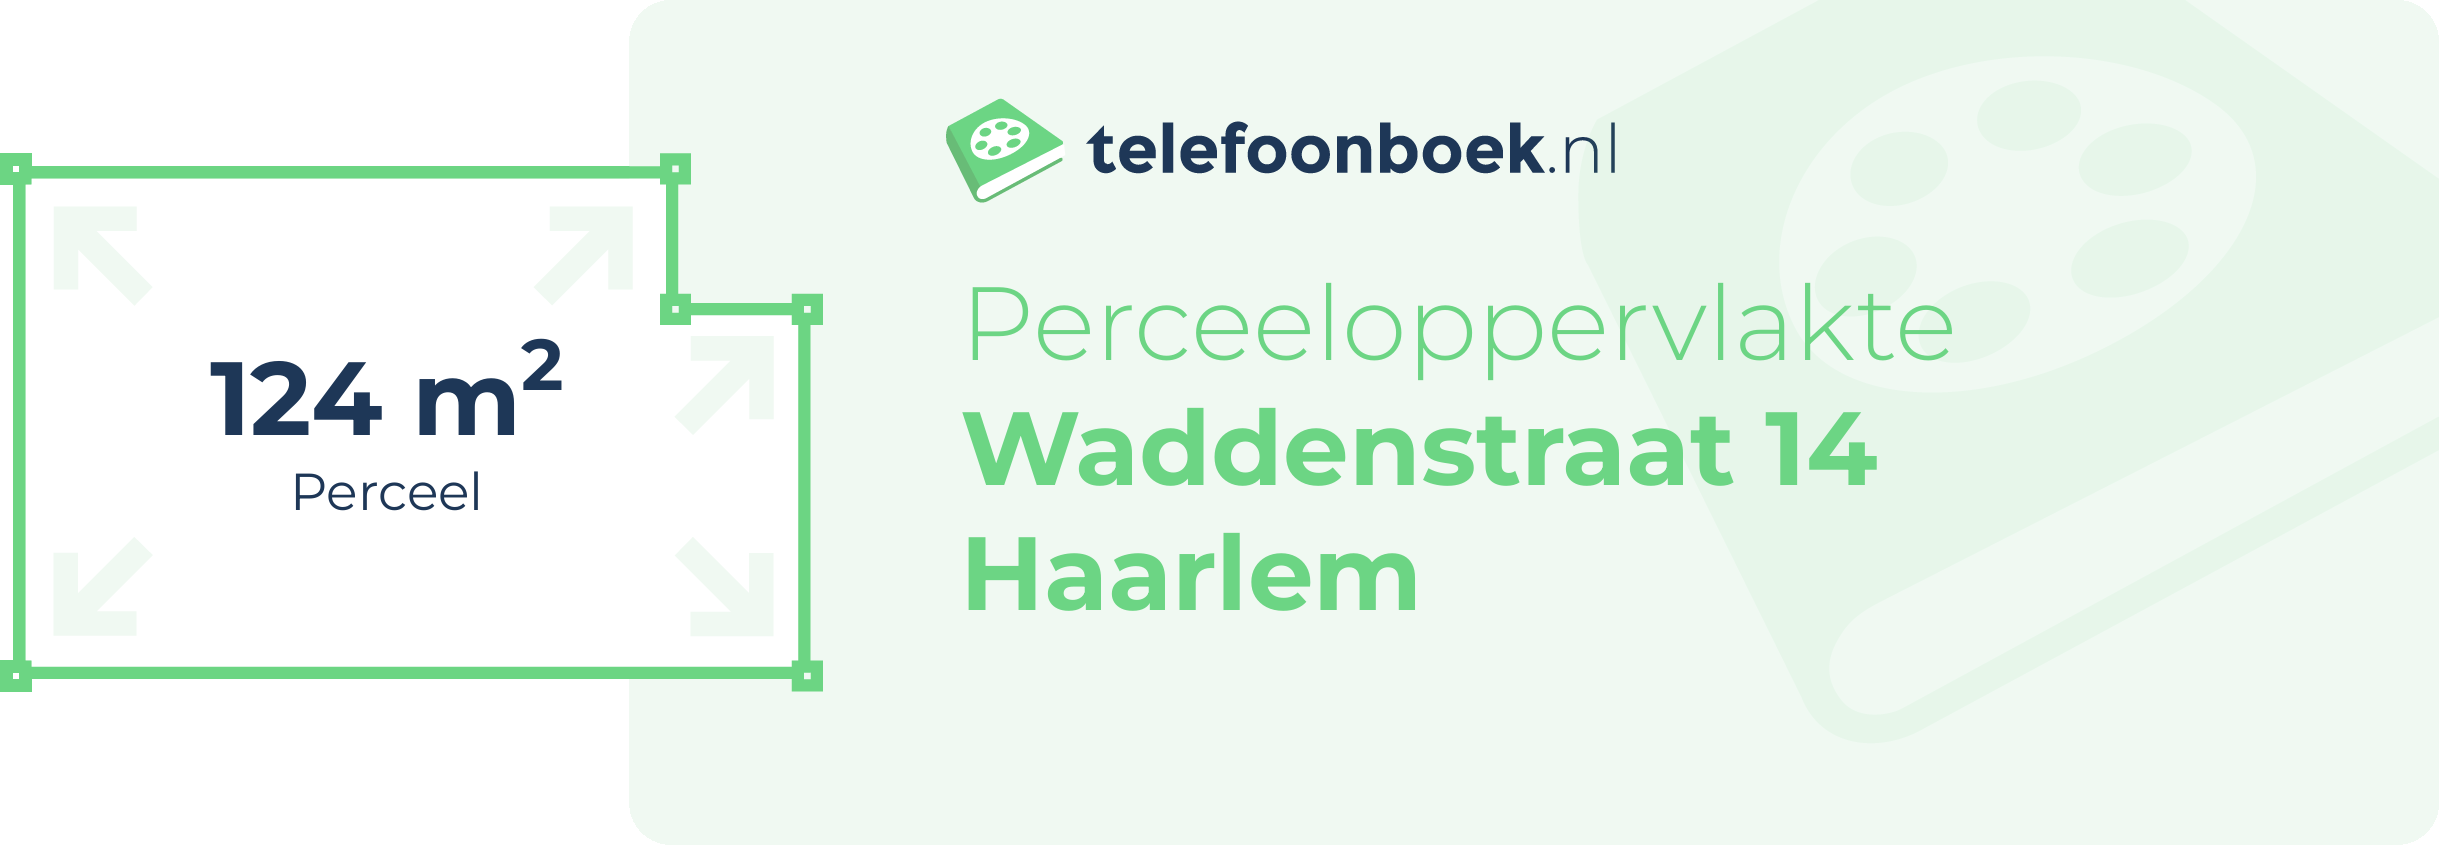 Perceeloppervlakte Waddenstraat 14 Haarlem